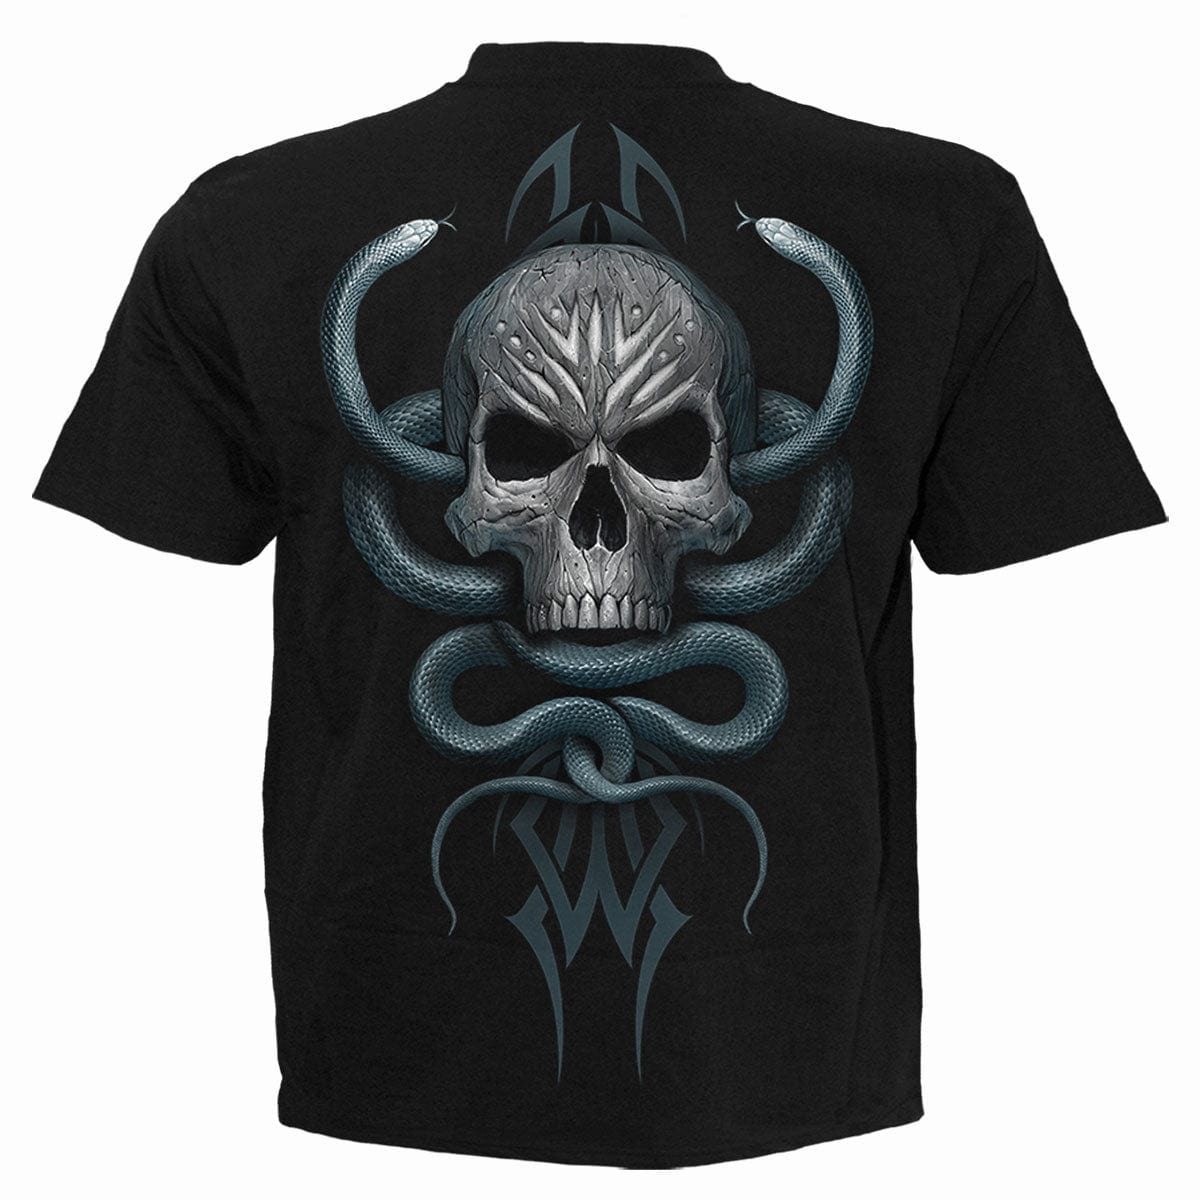 STONE GAZE - T-Shirt Black - Spiral USA